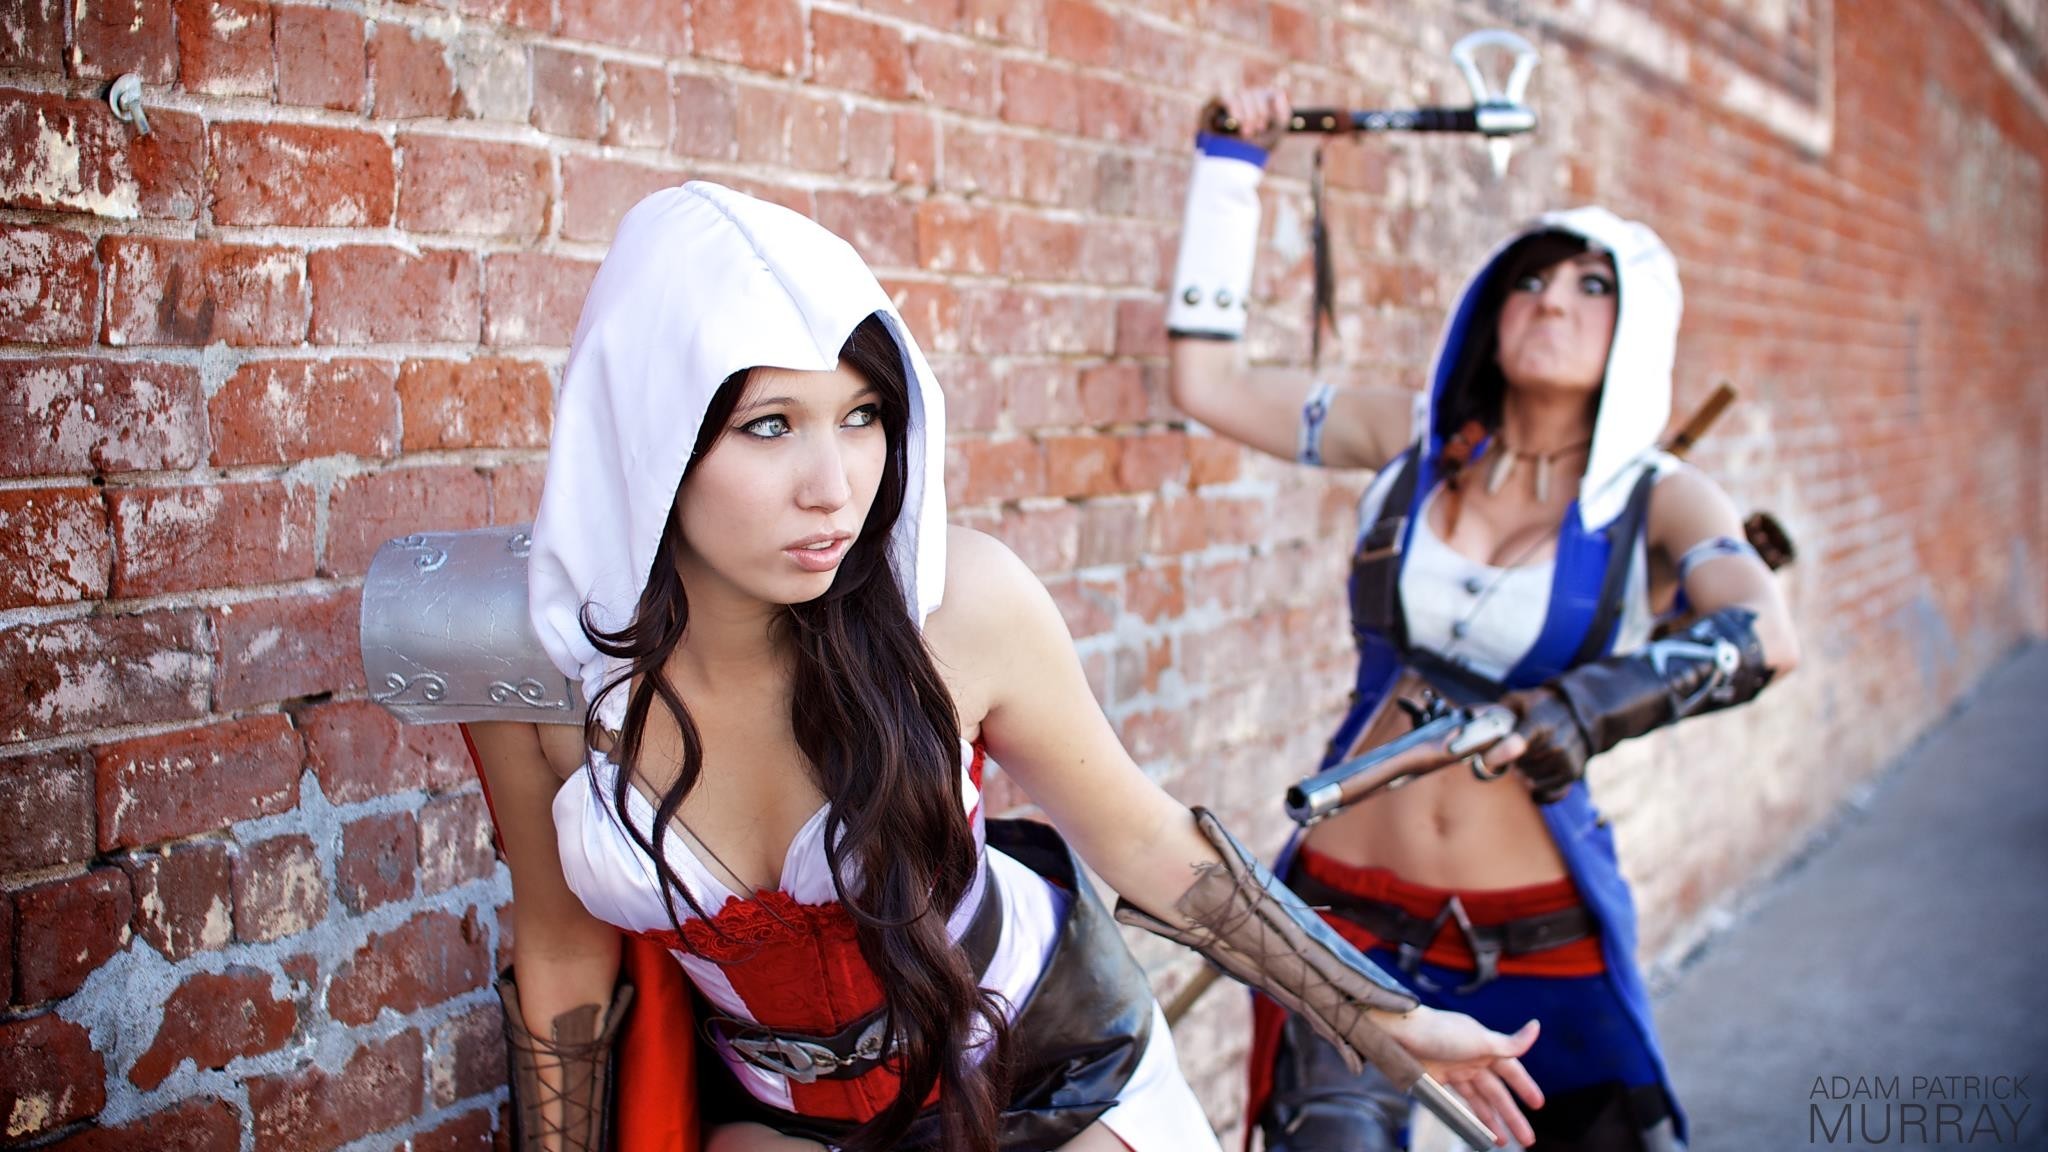 People 2048x1152 cosplay Assassin's Creed Jessica Nigri bricks Adam Patrick Murray two women hoods model video game girls women outdoors brunette fantasy girl women